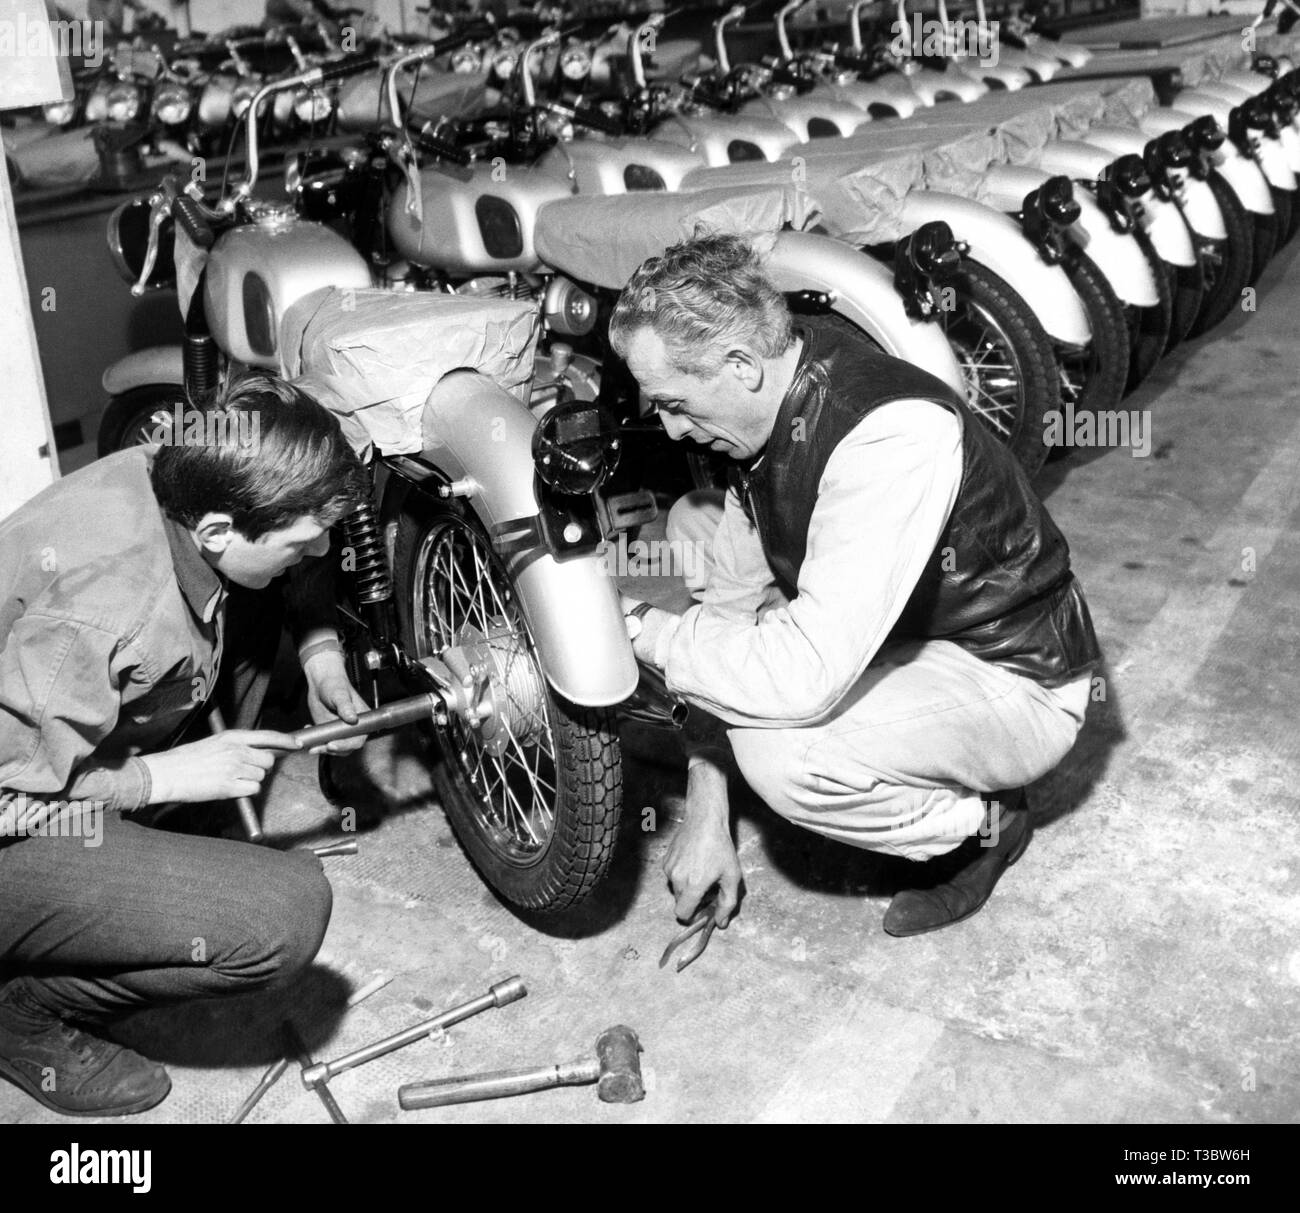 gilera motorcycles, 1966 Stock Photo